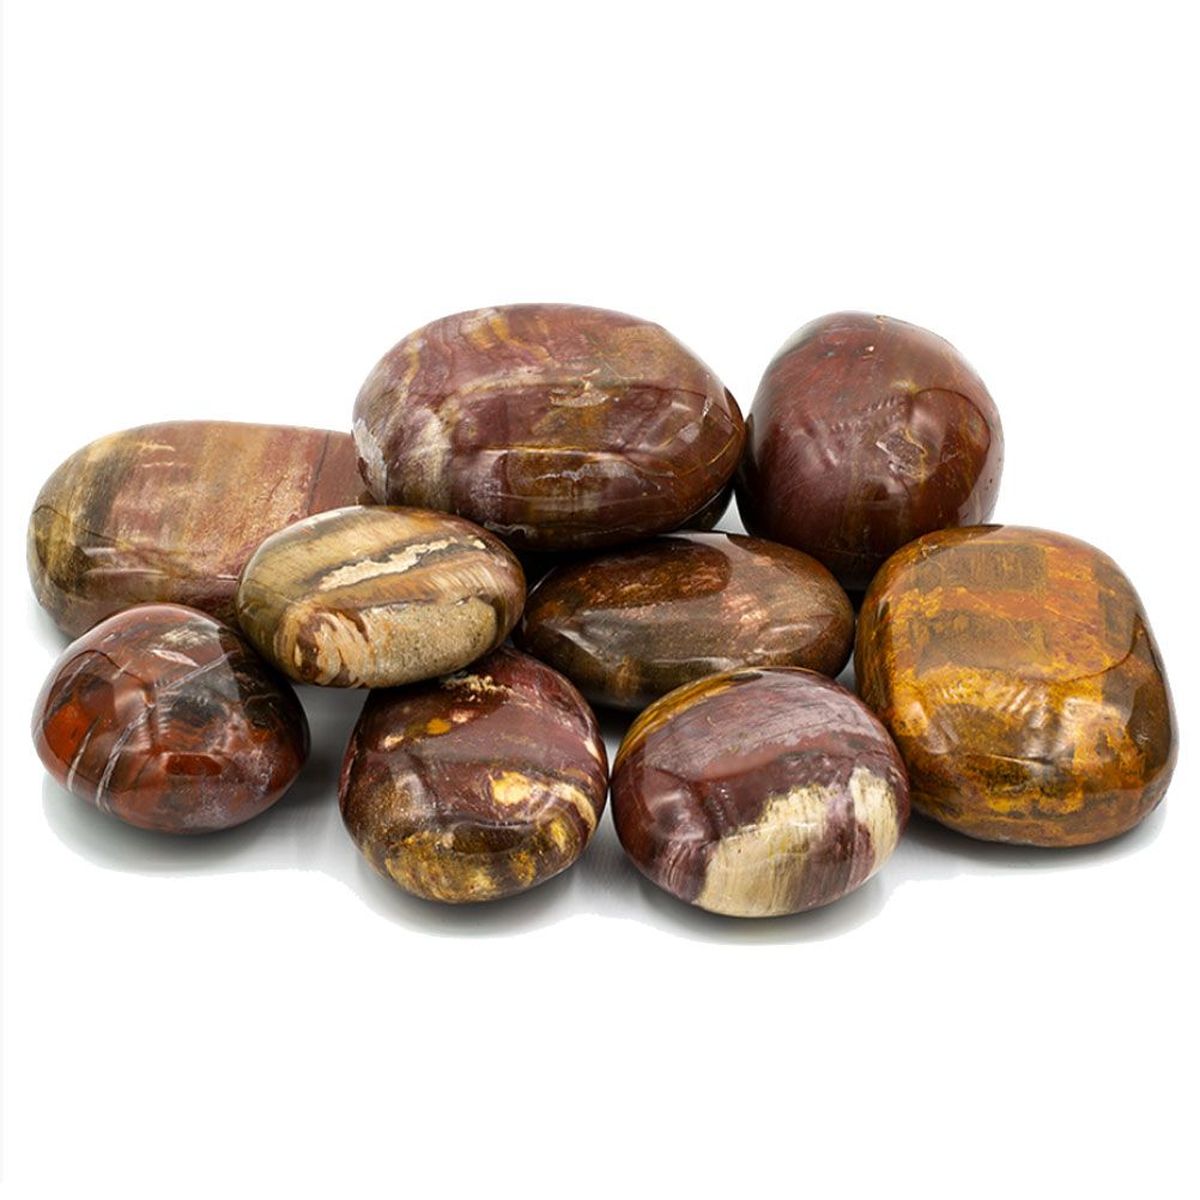 Stone petrified wood - 90-100 grams